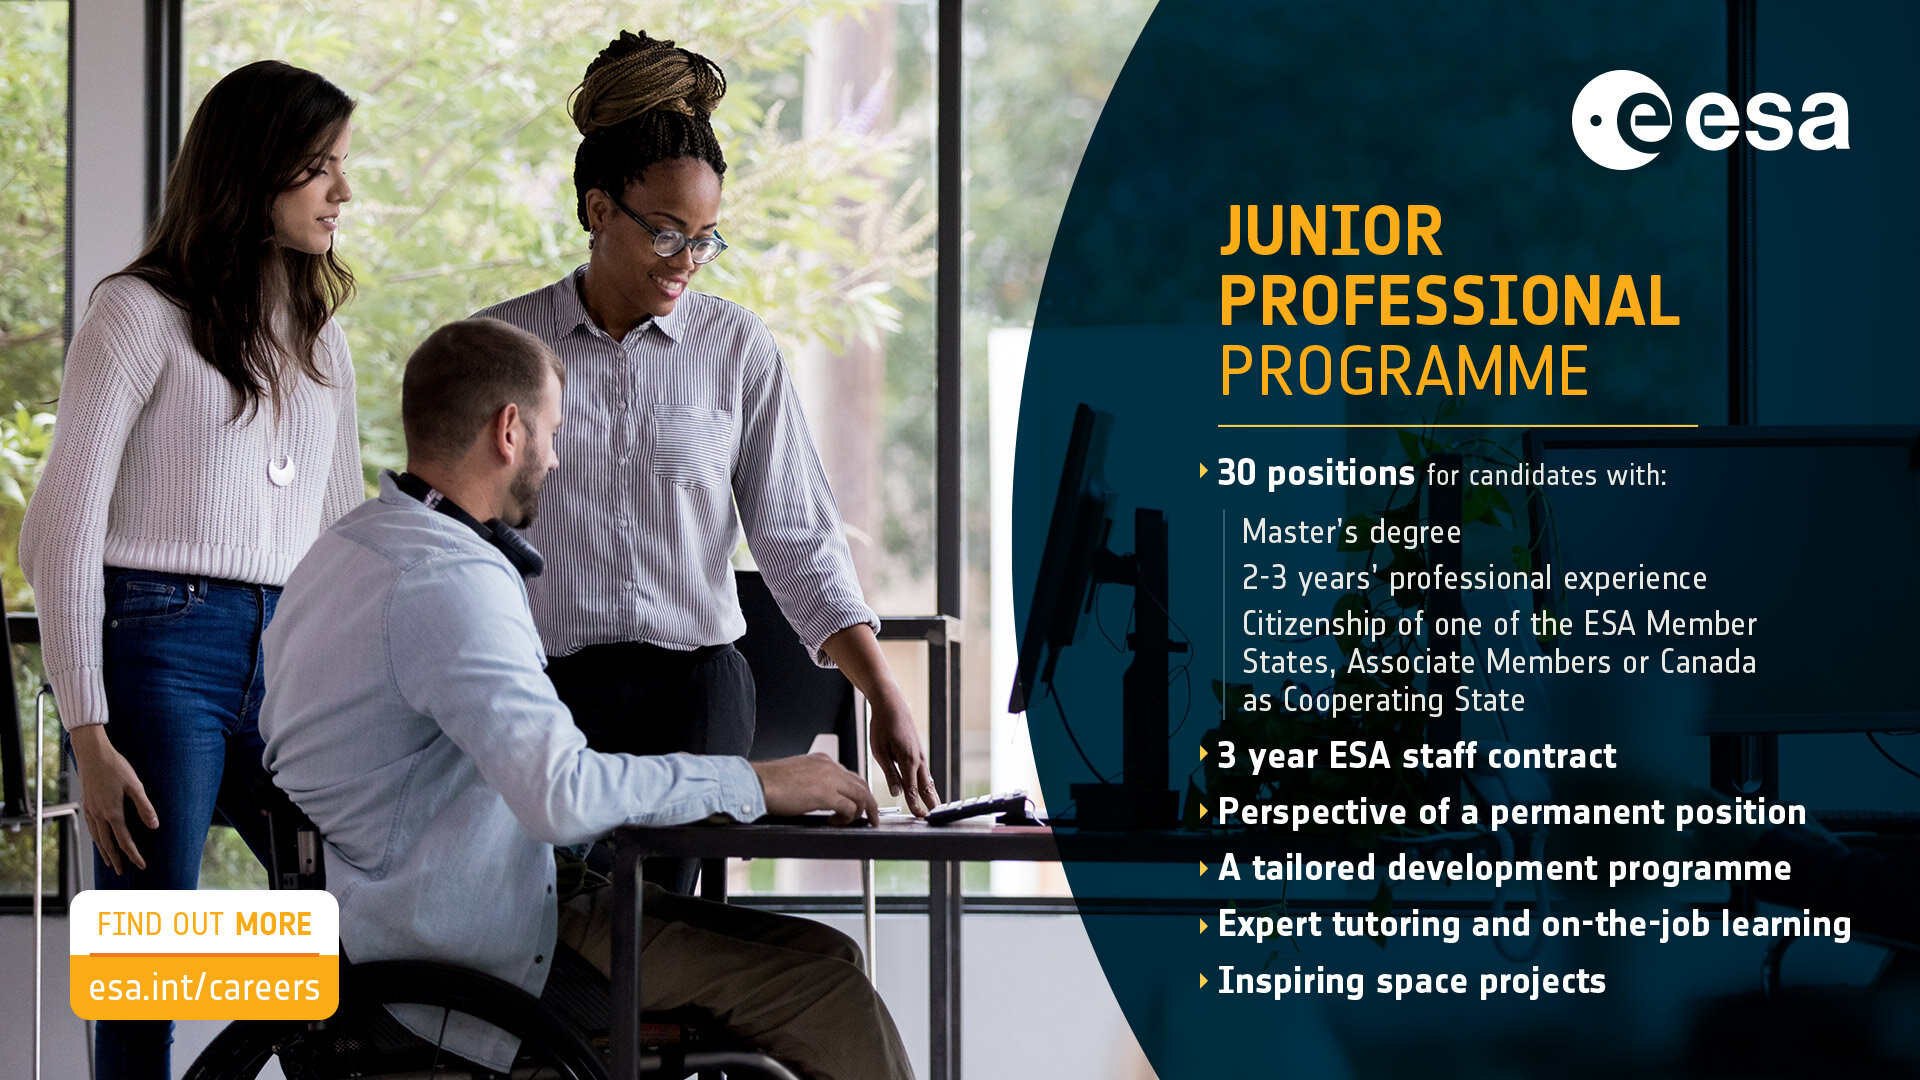 Junior Professional Programme launch